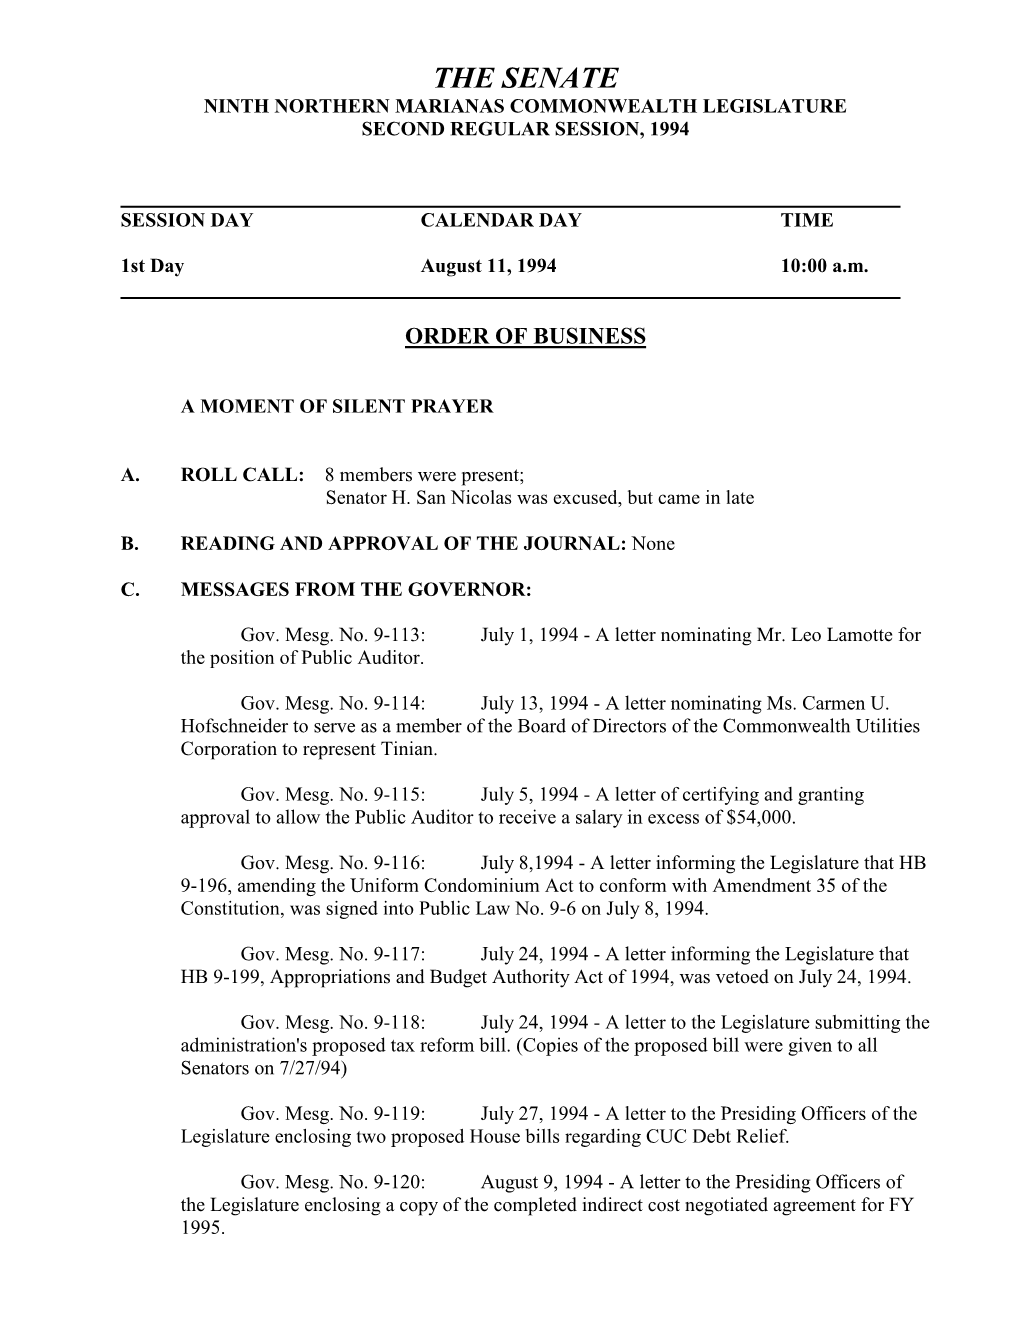 The Senate Ninth Northern Marianas Commonwealth Legislature Second Regular Session, 1994